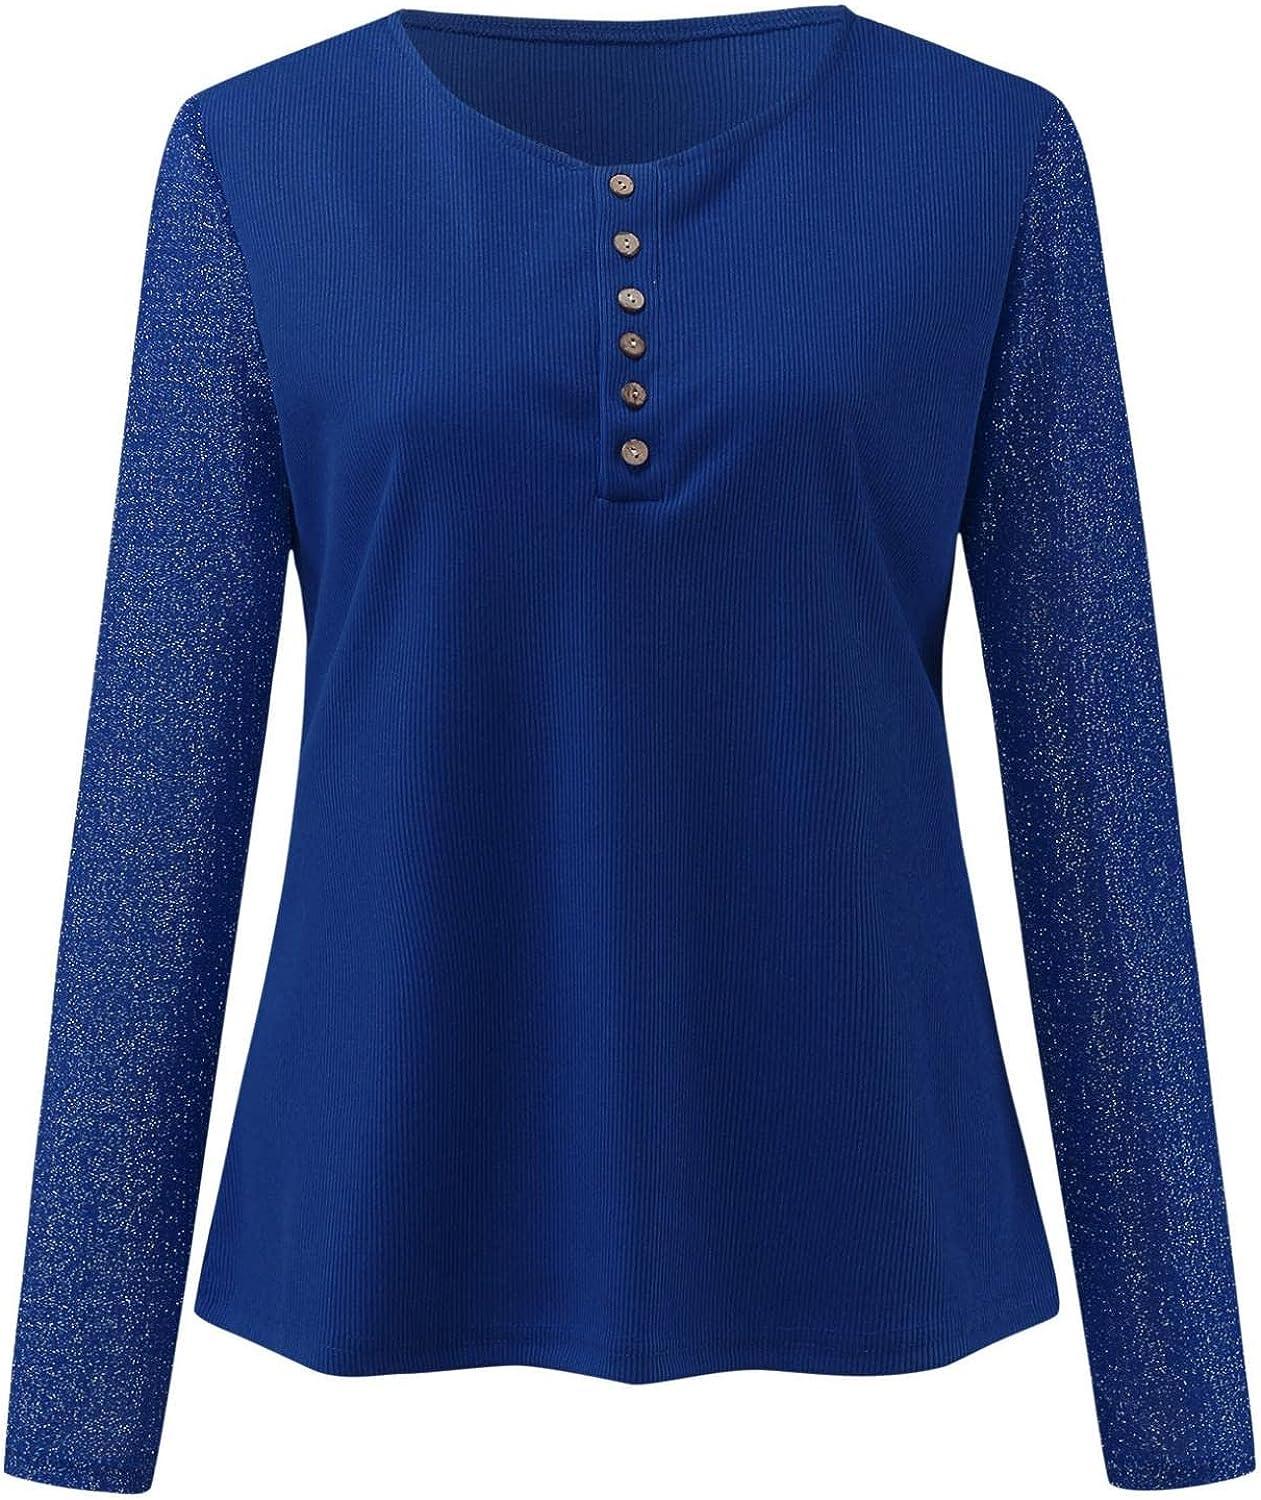 Elainilye Fashion Long Sleeve Shirts For Women Underscrubs Solid Color V  Neck Long Sleeve Knitting Shirt Slim Blouse Tops,Blue 